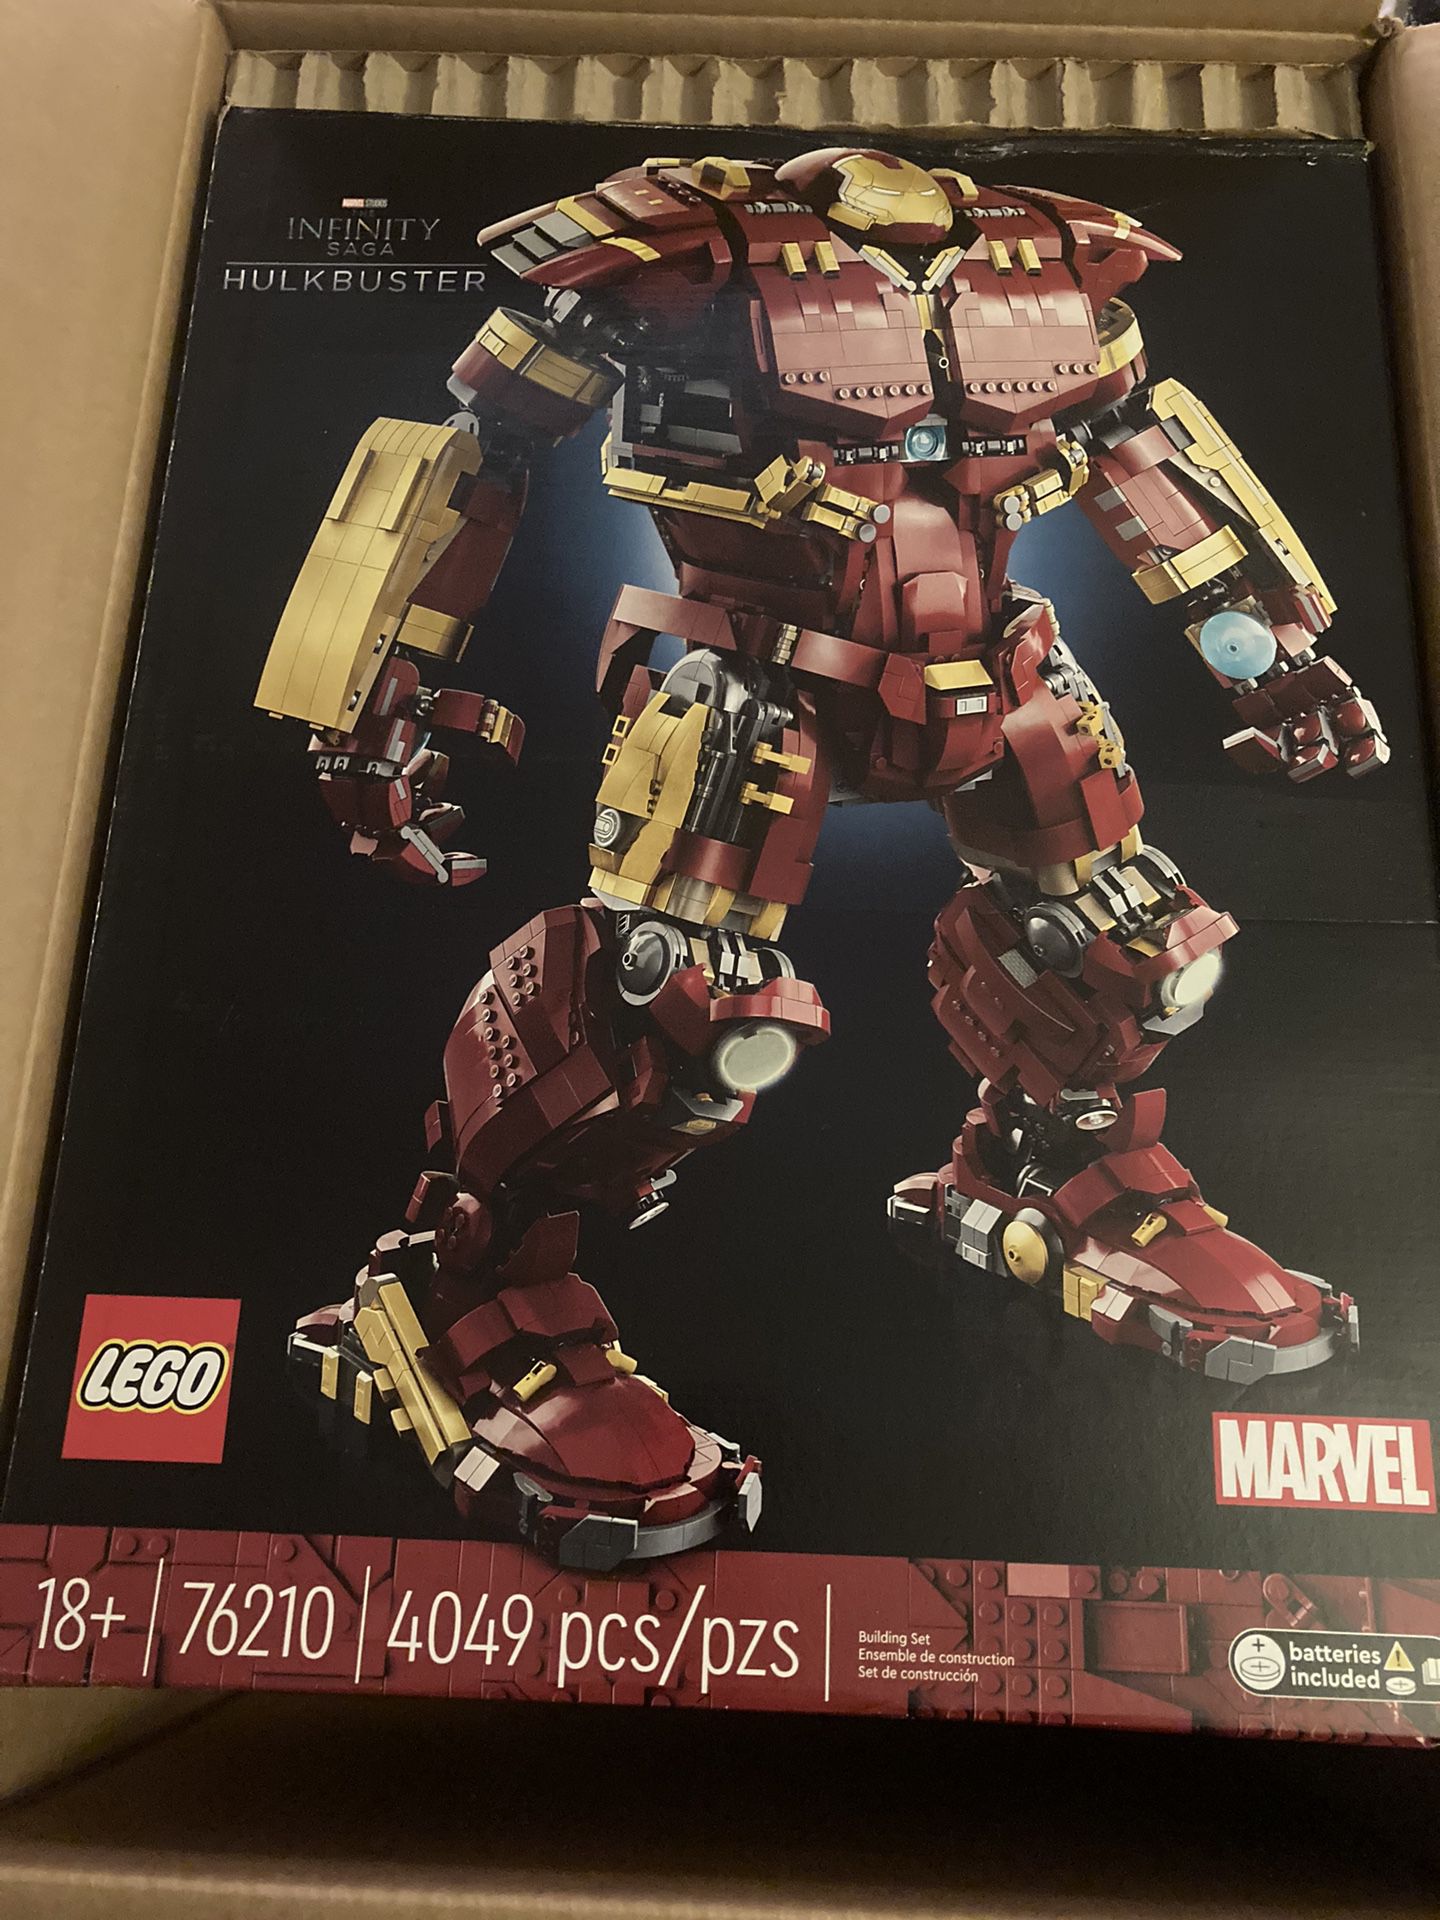 Lego 76210 Marvel Hulkbuster, Hobbies & Toys, Toys & Games on